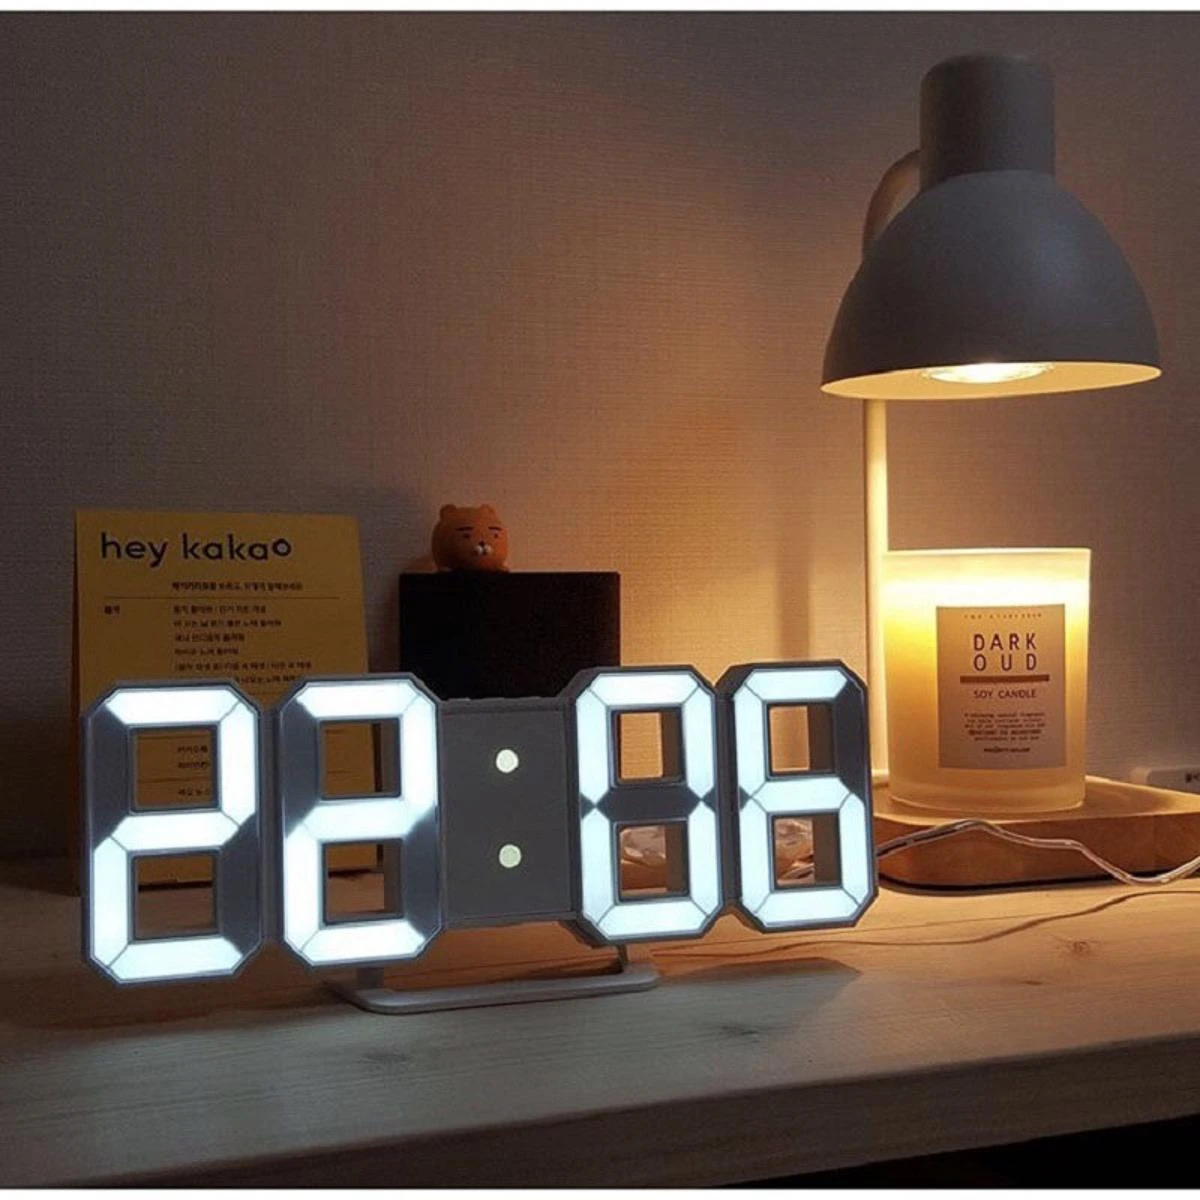 Digital Wall Clock LED Table Clock Time Alarm Temperature Date Sound Control Night Light